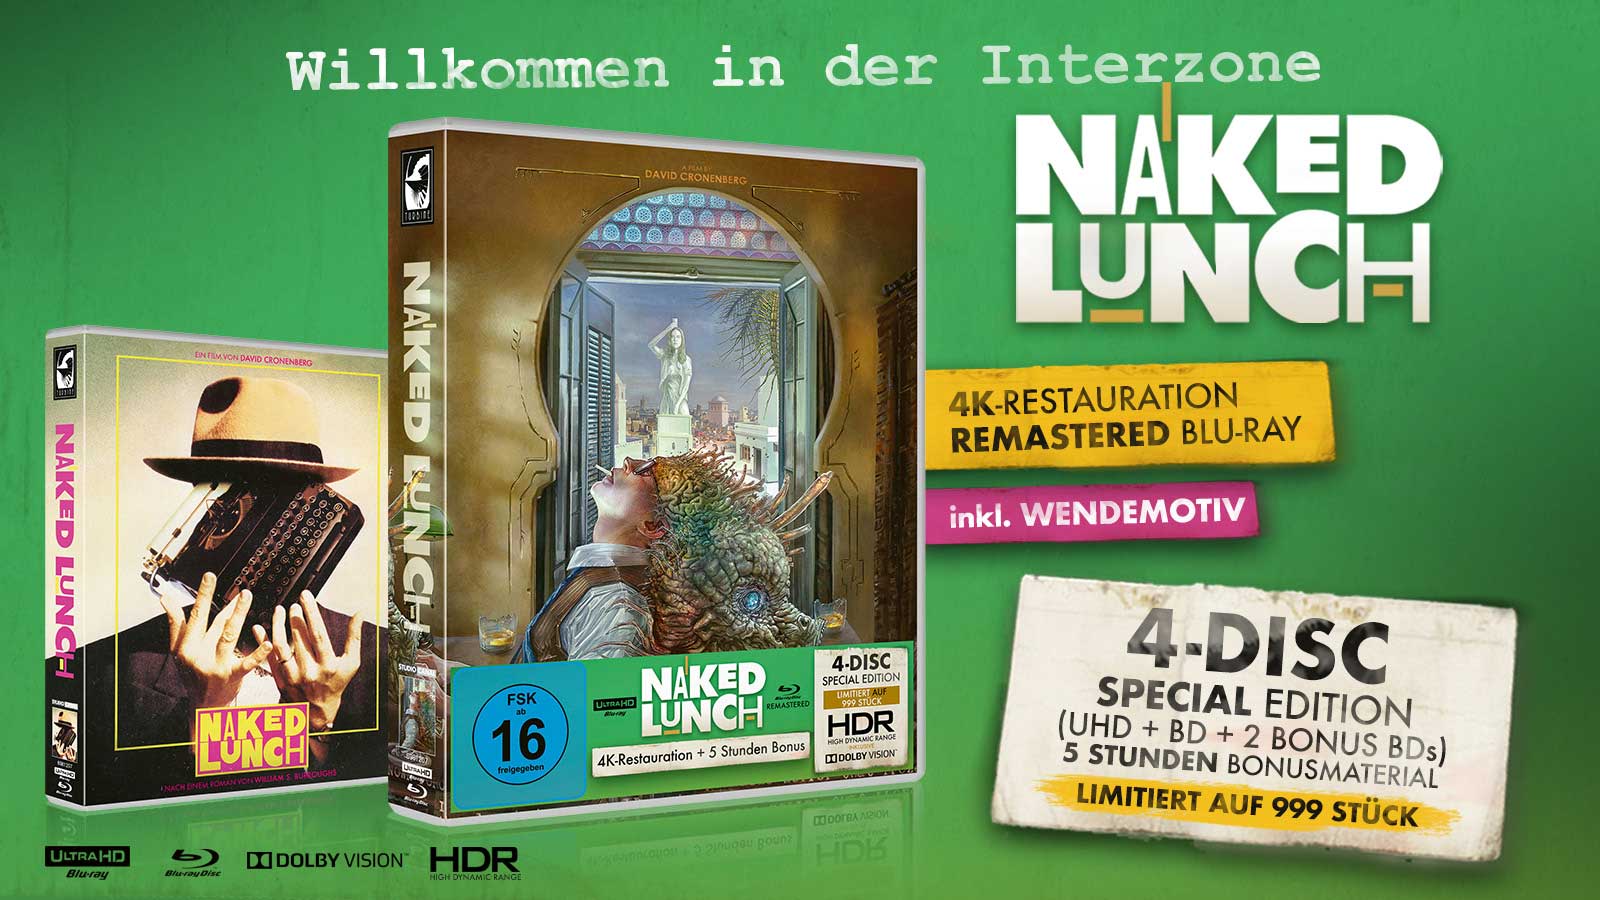 NakedLunch-Multibox-TurbineWebsiteBanner-1600x900web